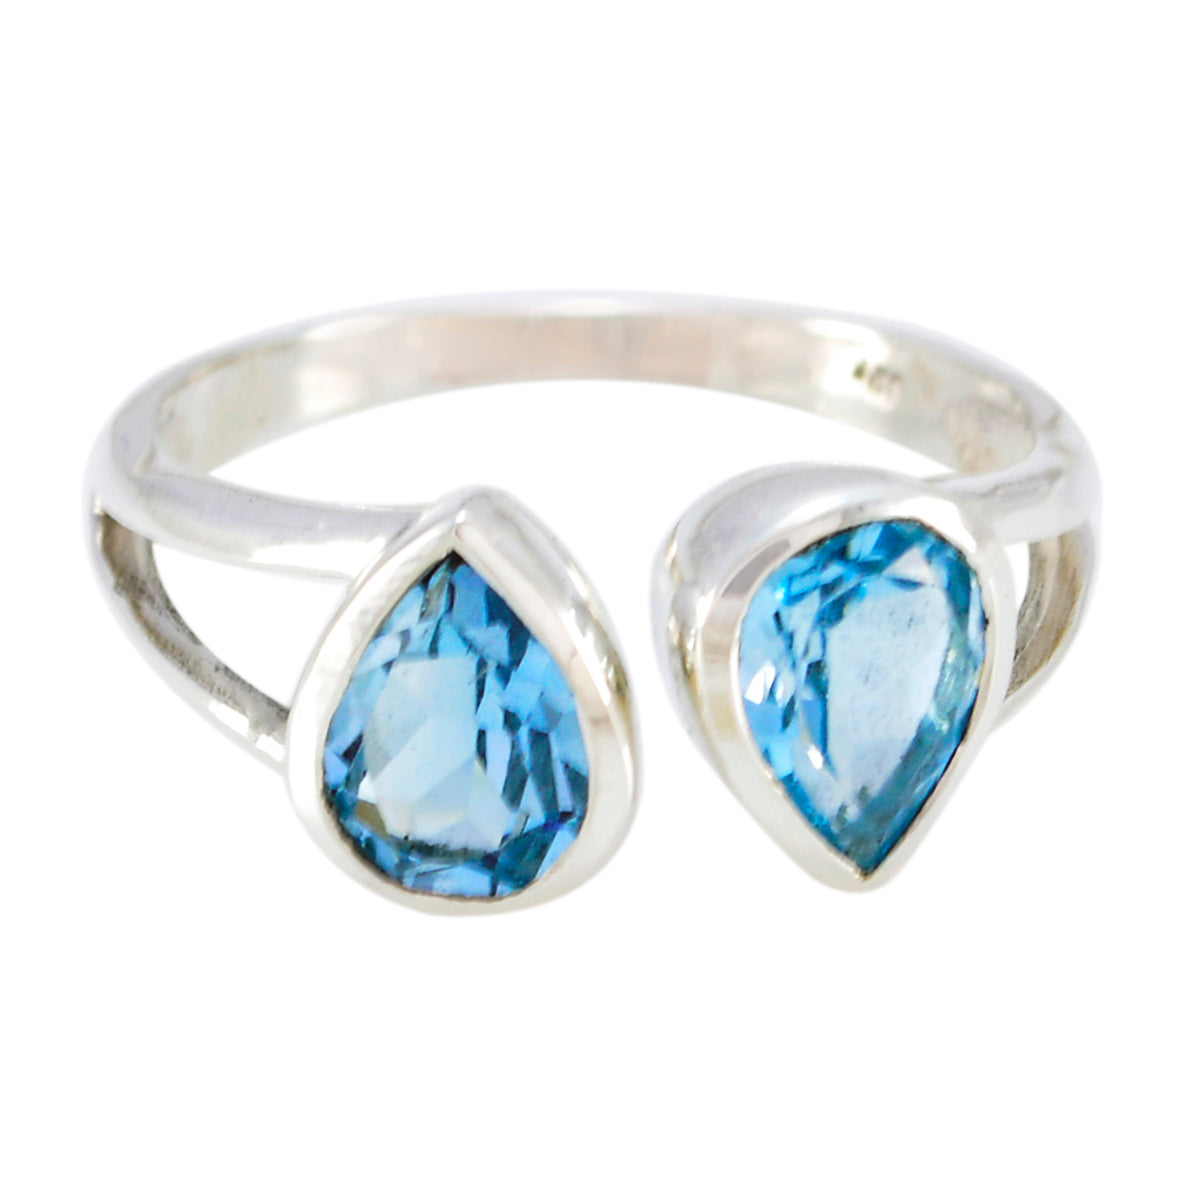 Riyo Cute Gemstone Blue Topaz 925 Sterling Silver Ring Lagos Jewelry